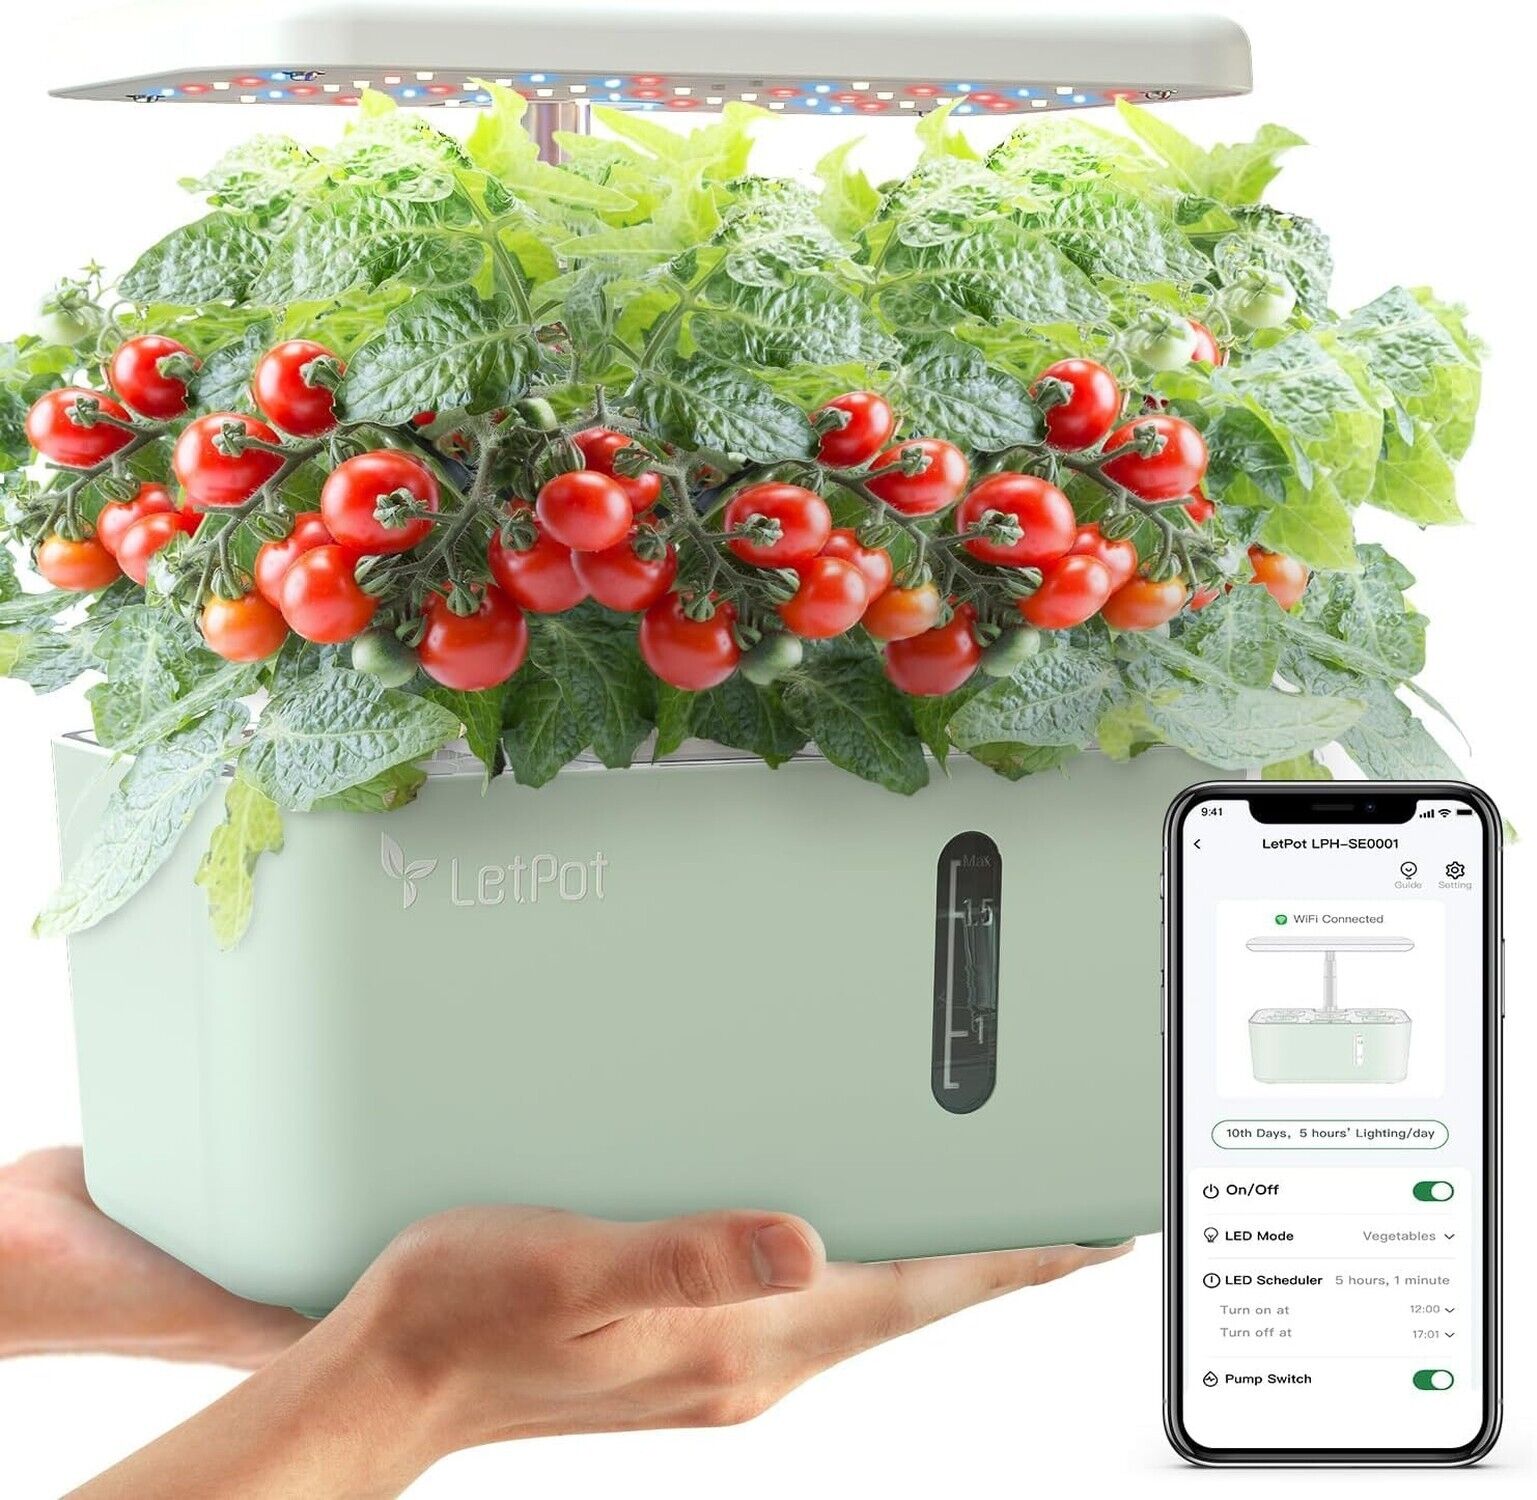 LetPot Hydroponics Grow System - Smart Indoor Garden Kit for Hydroponics Star...